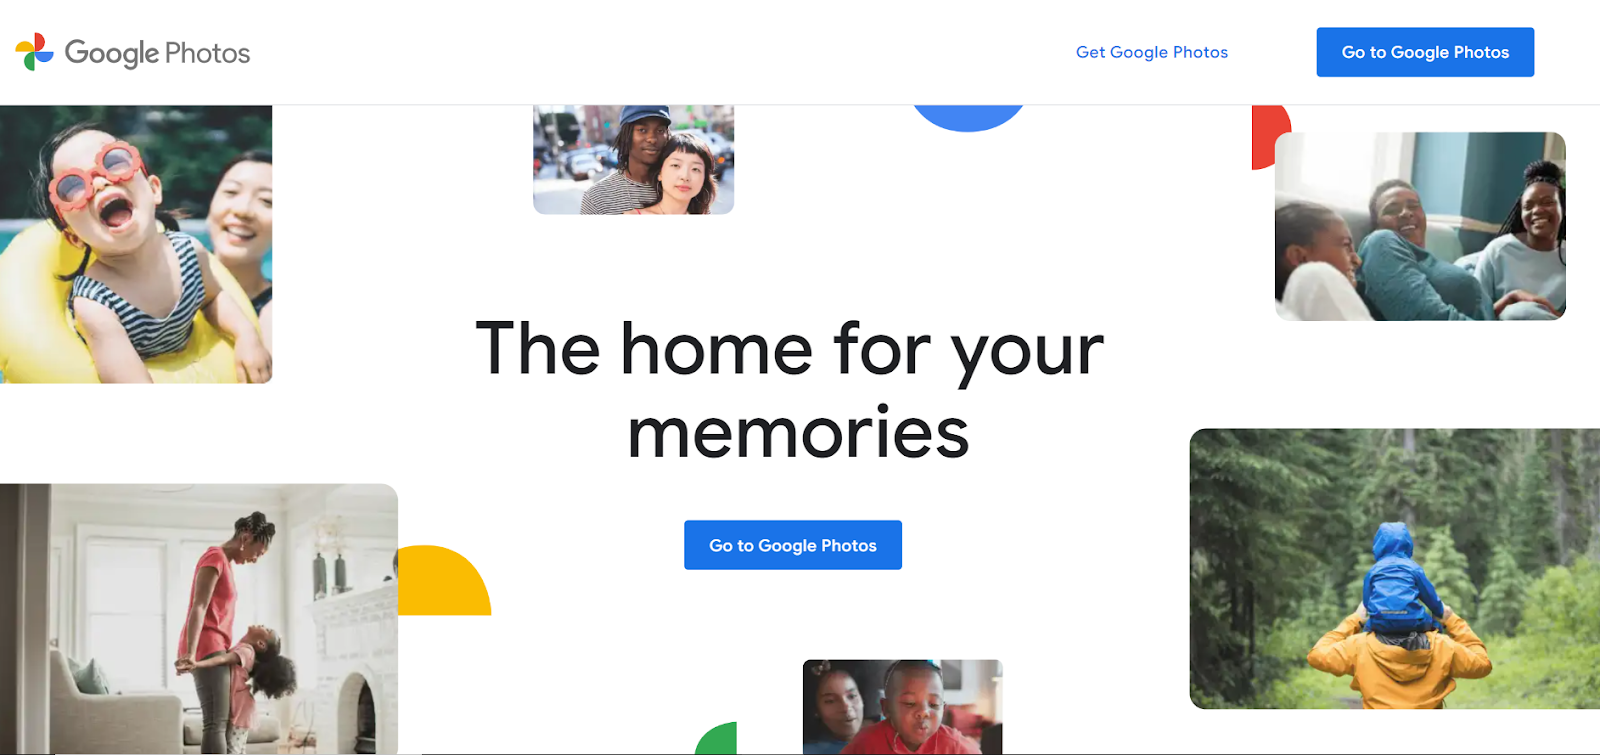 Google photos interface